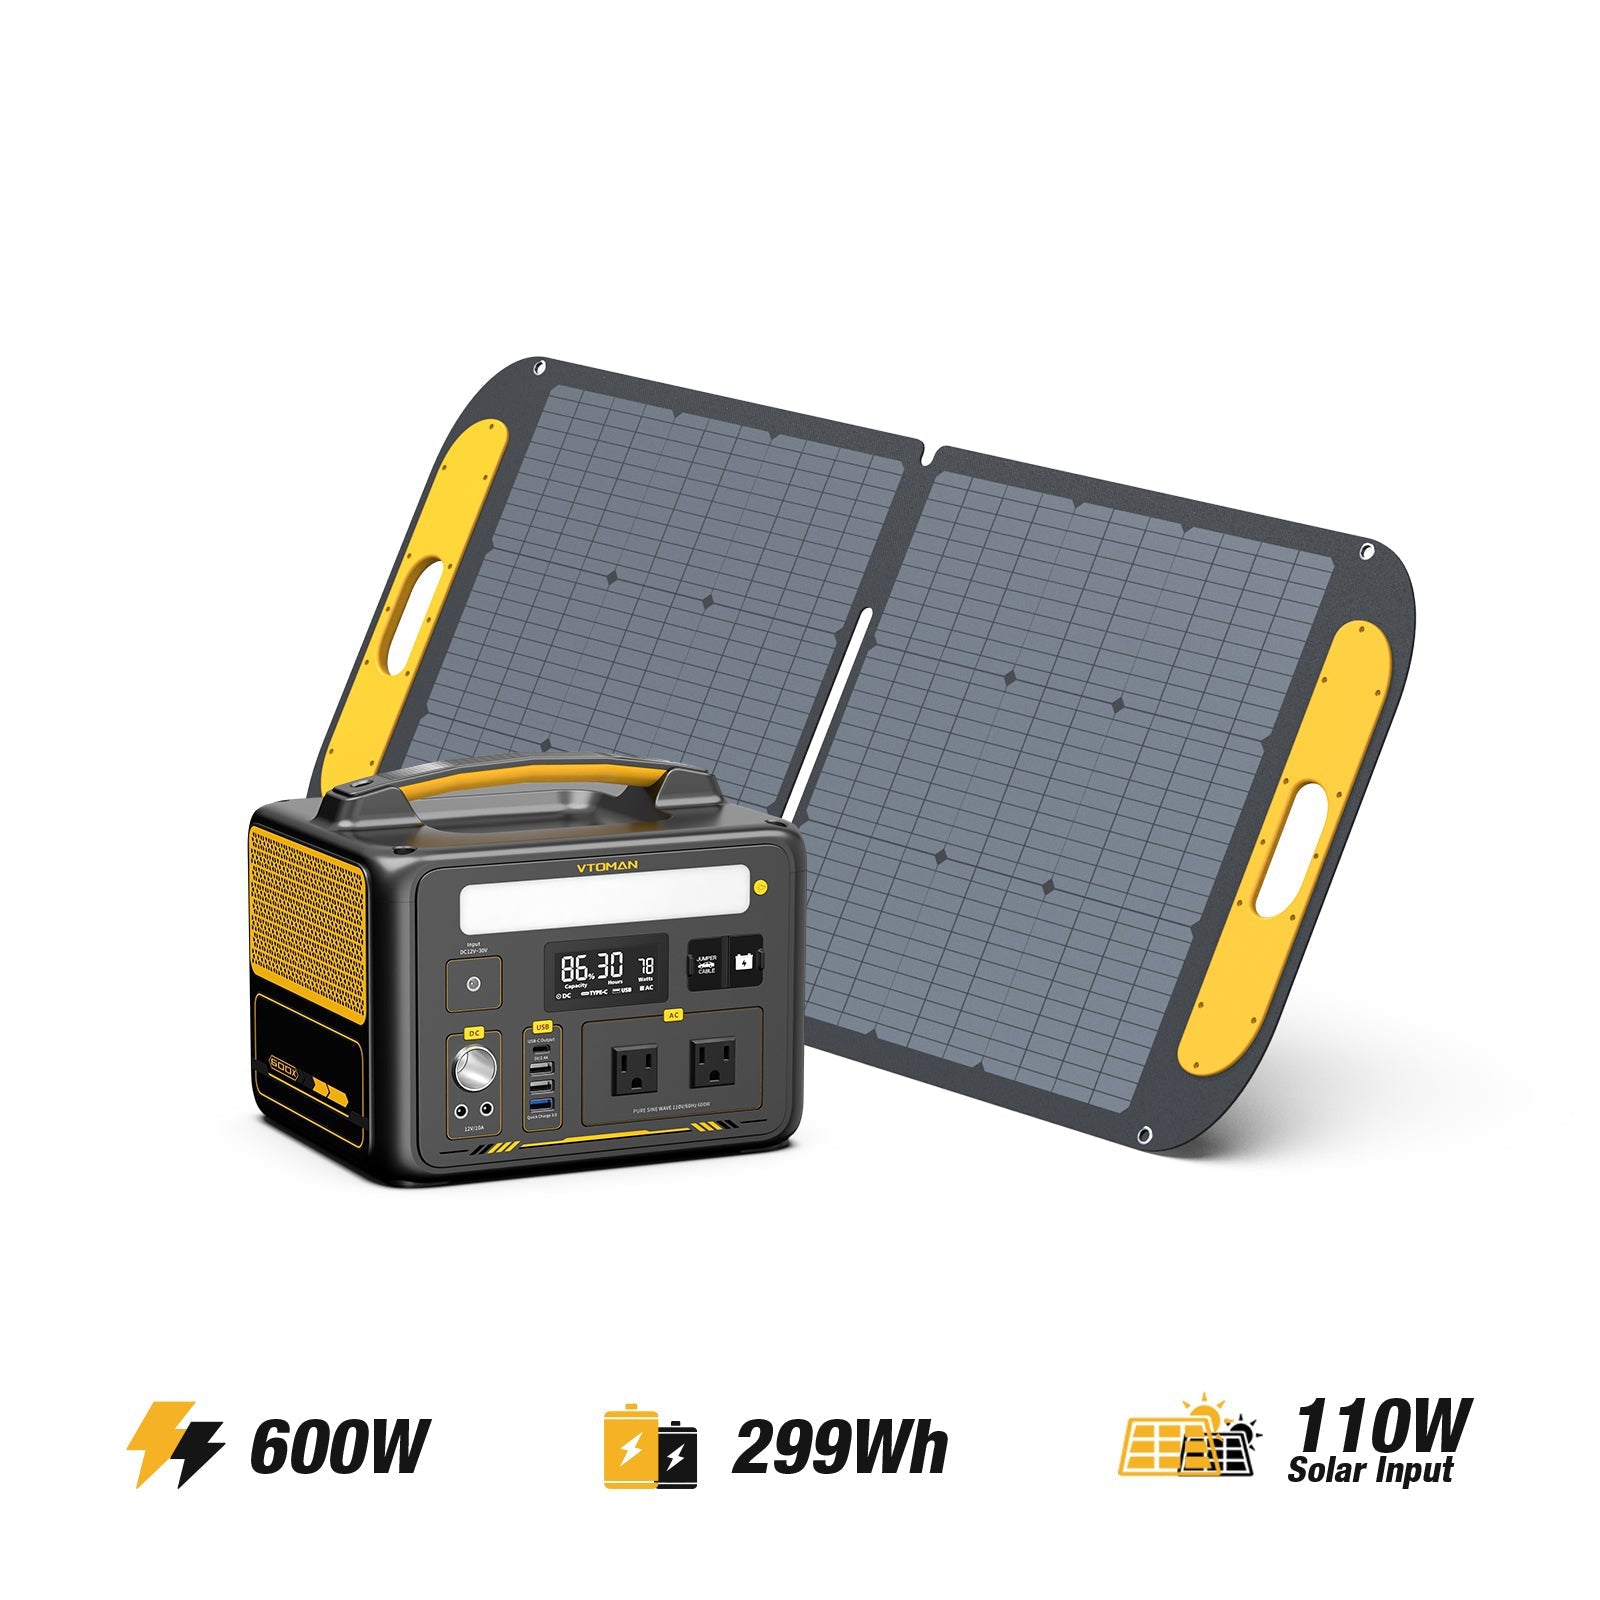 jump 600x power station-AC600W 299Wh capacity-110W solar panel